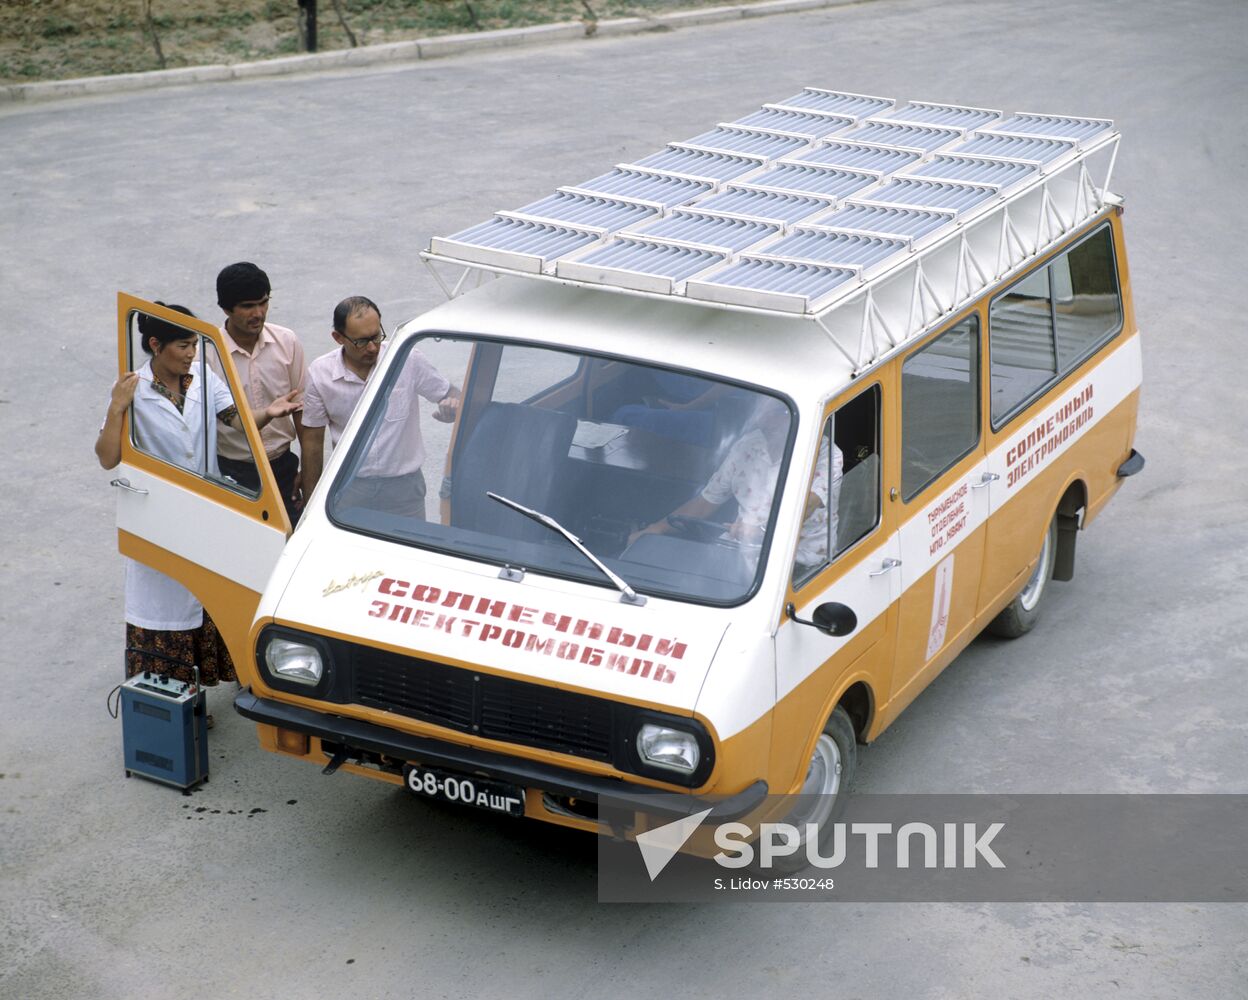 Sun-powered car